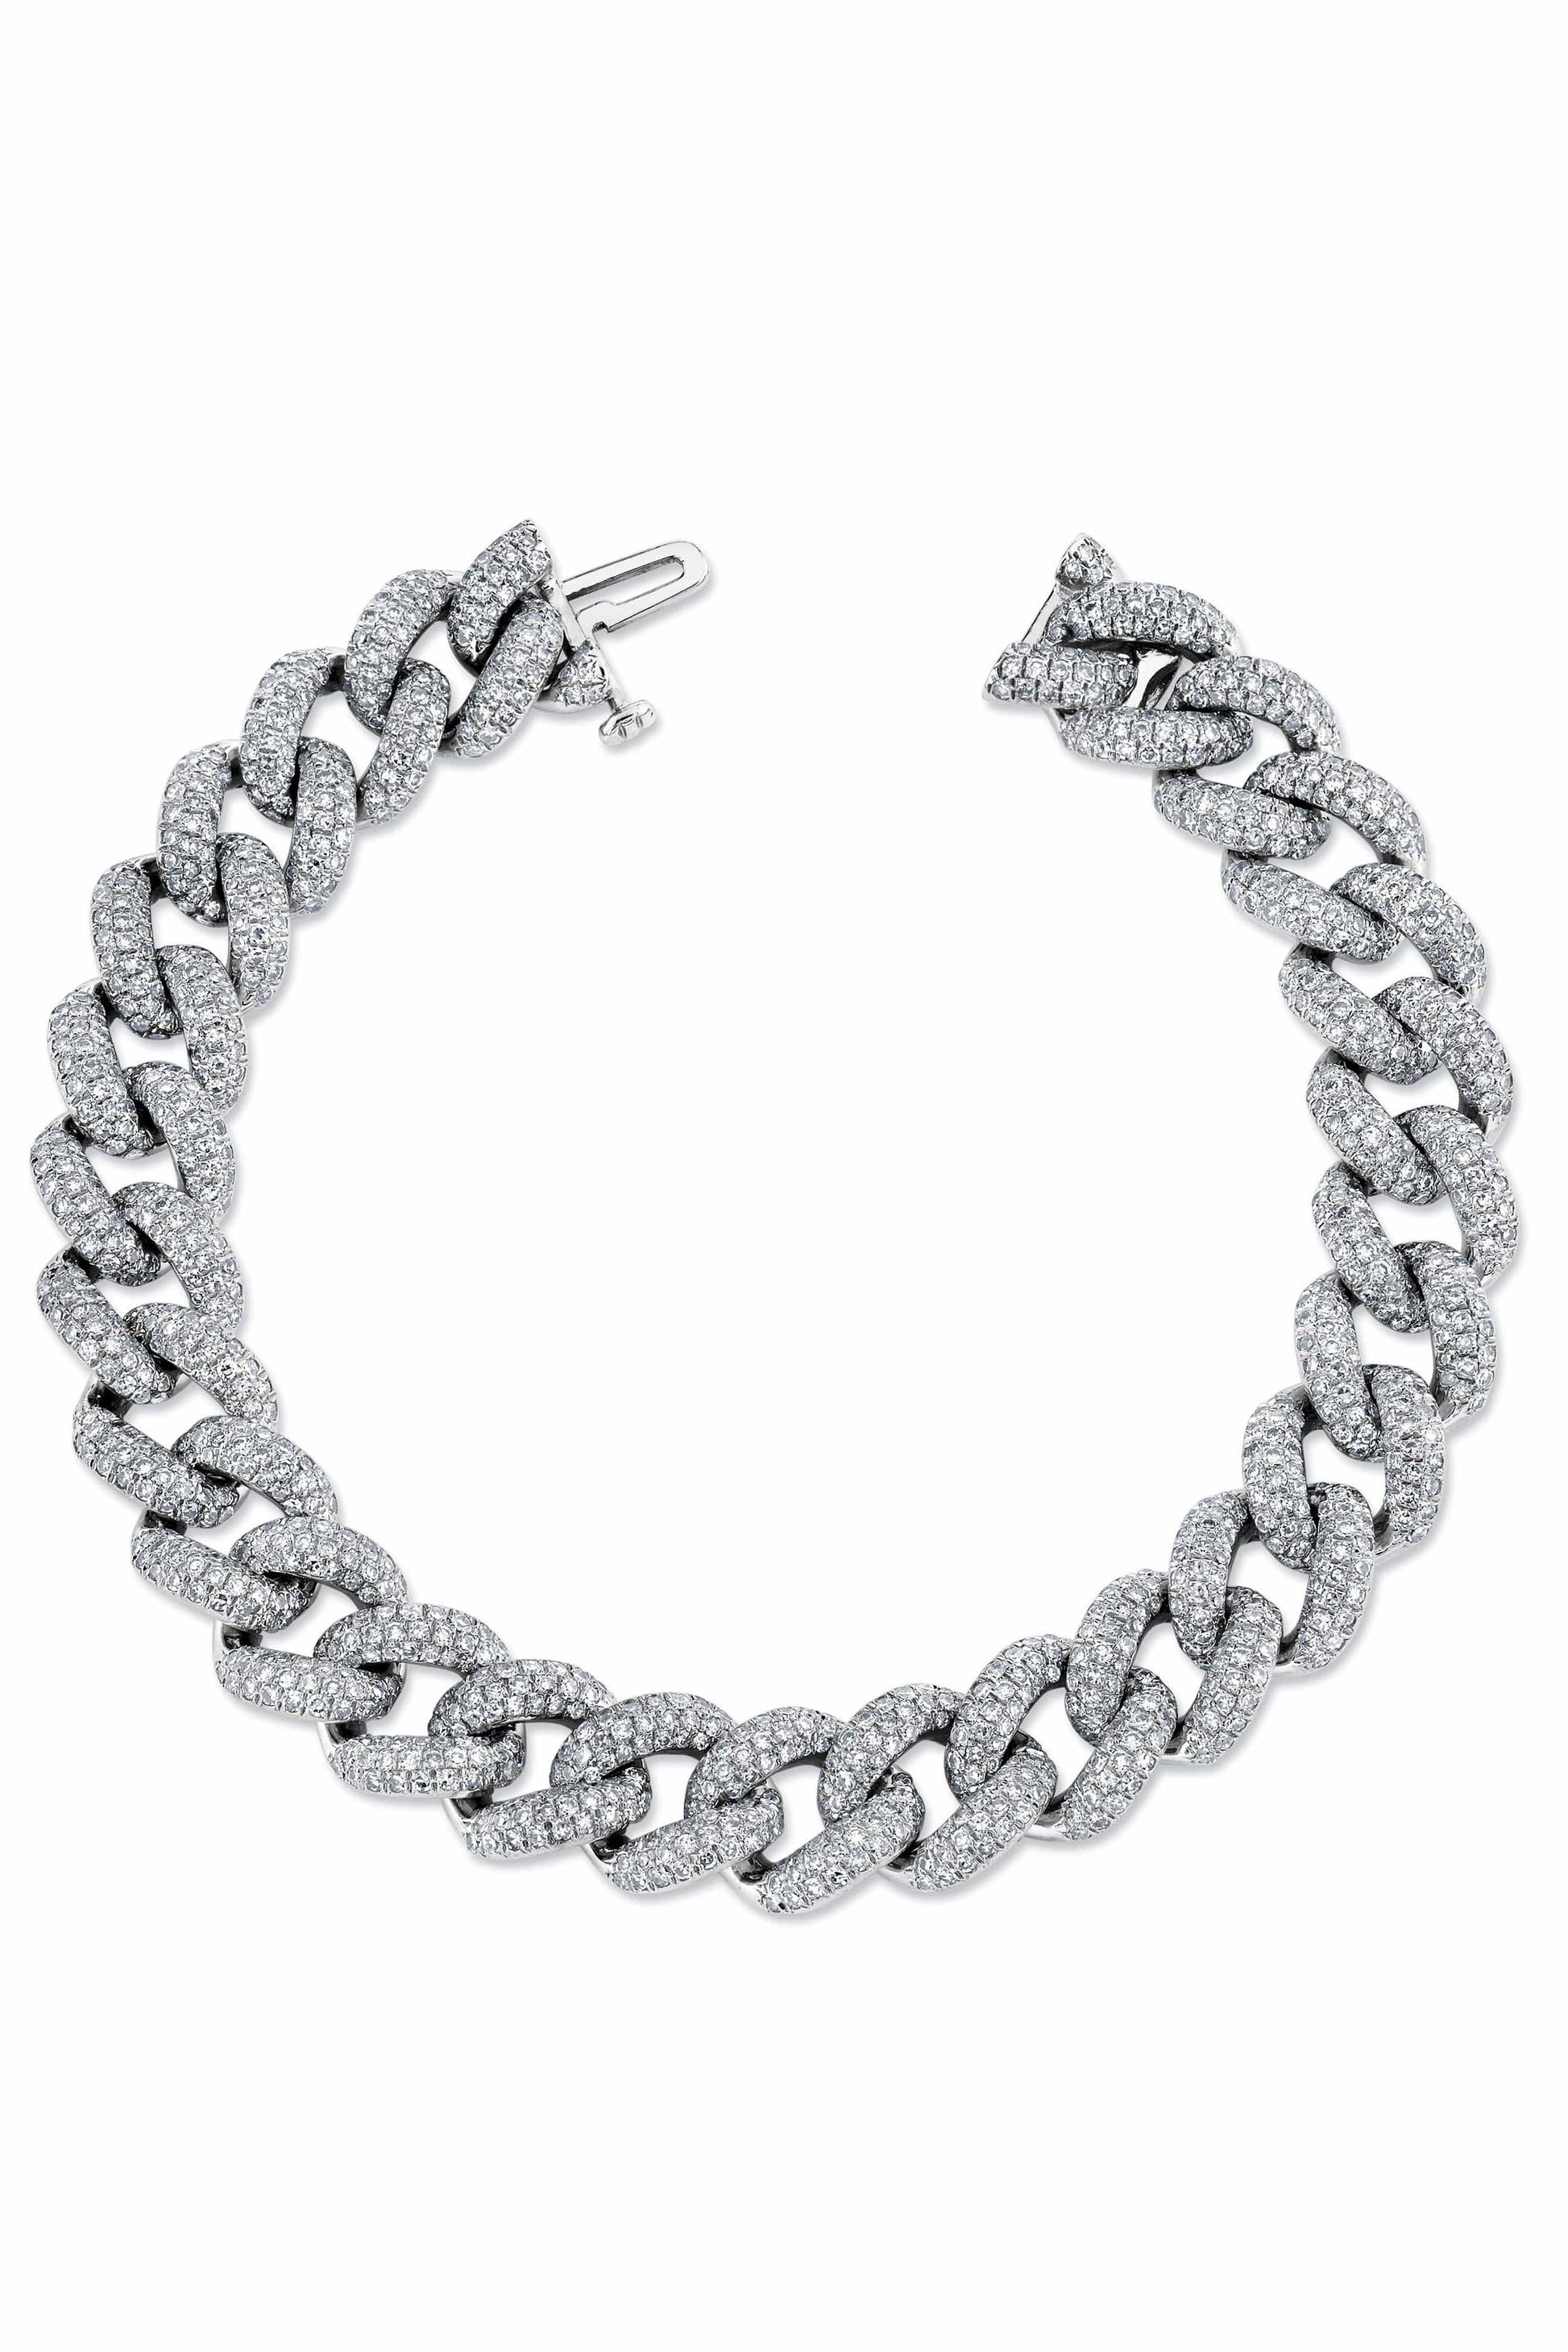 SHAY JEWELRY-Diamond Pave Essential Link Bracelet-WHITE GOLD